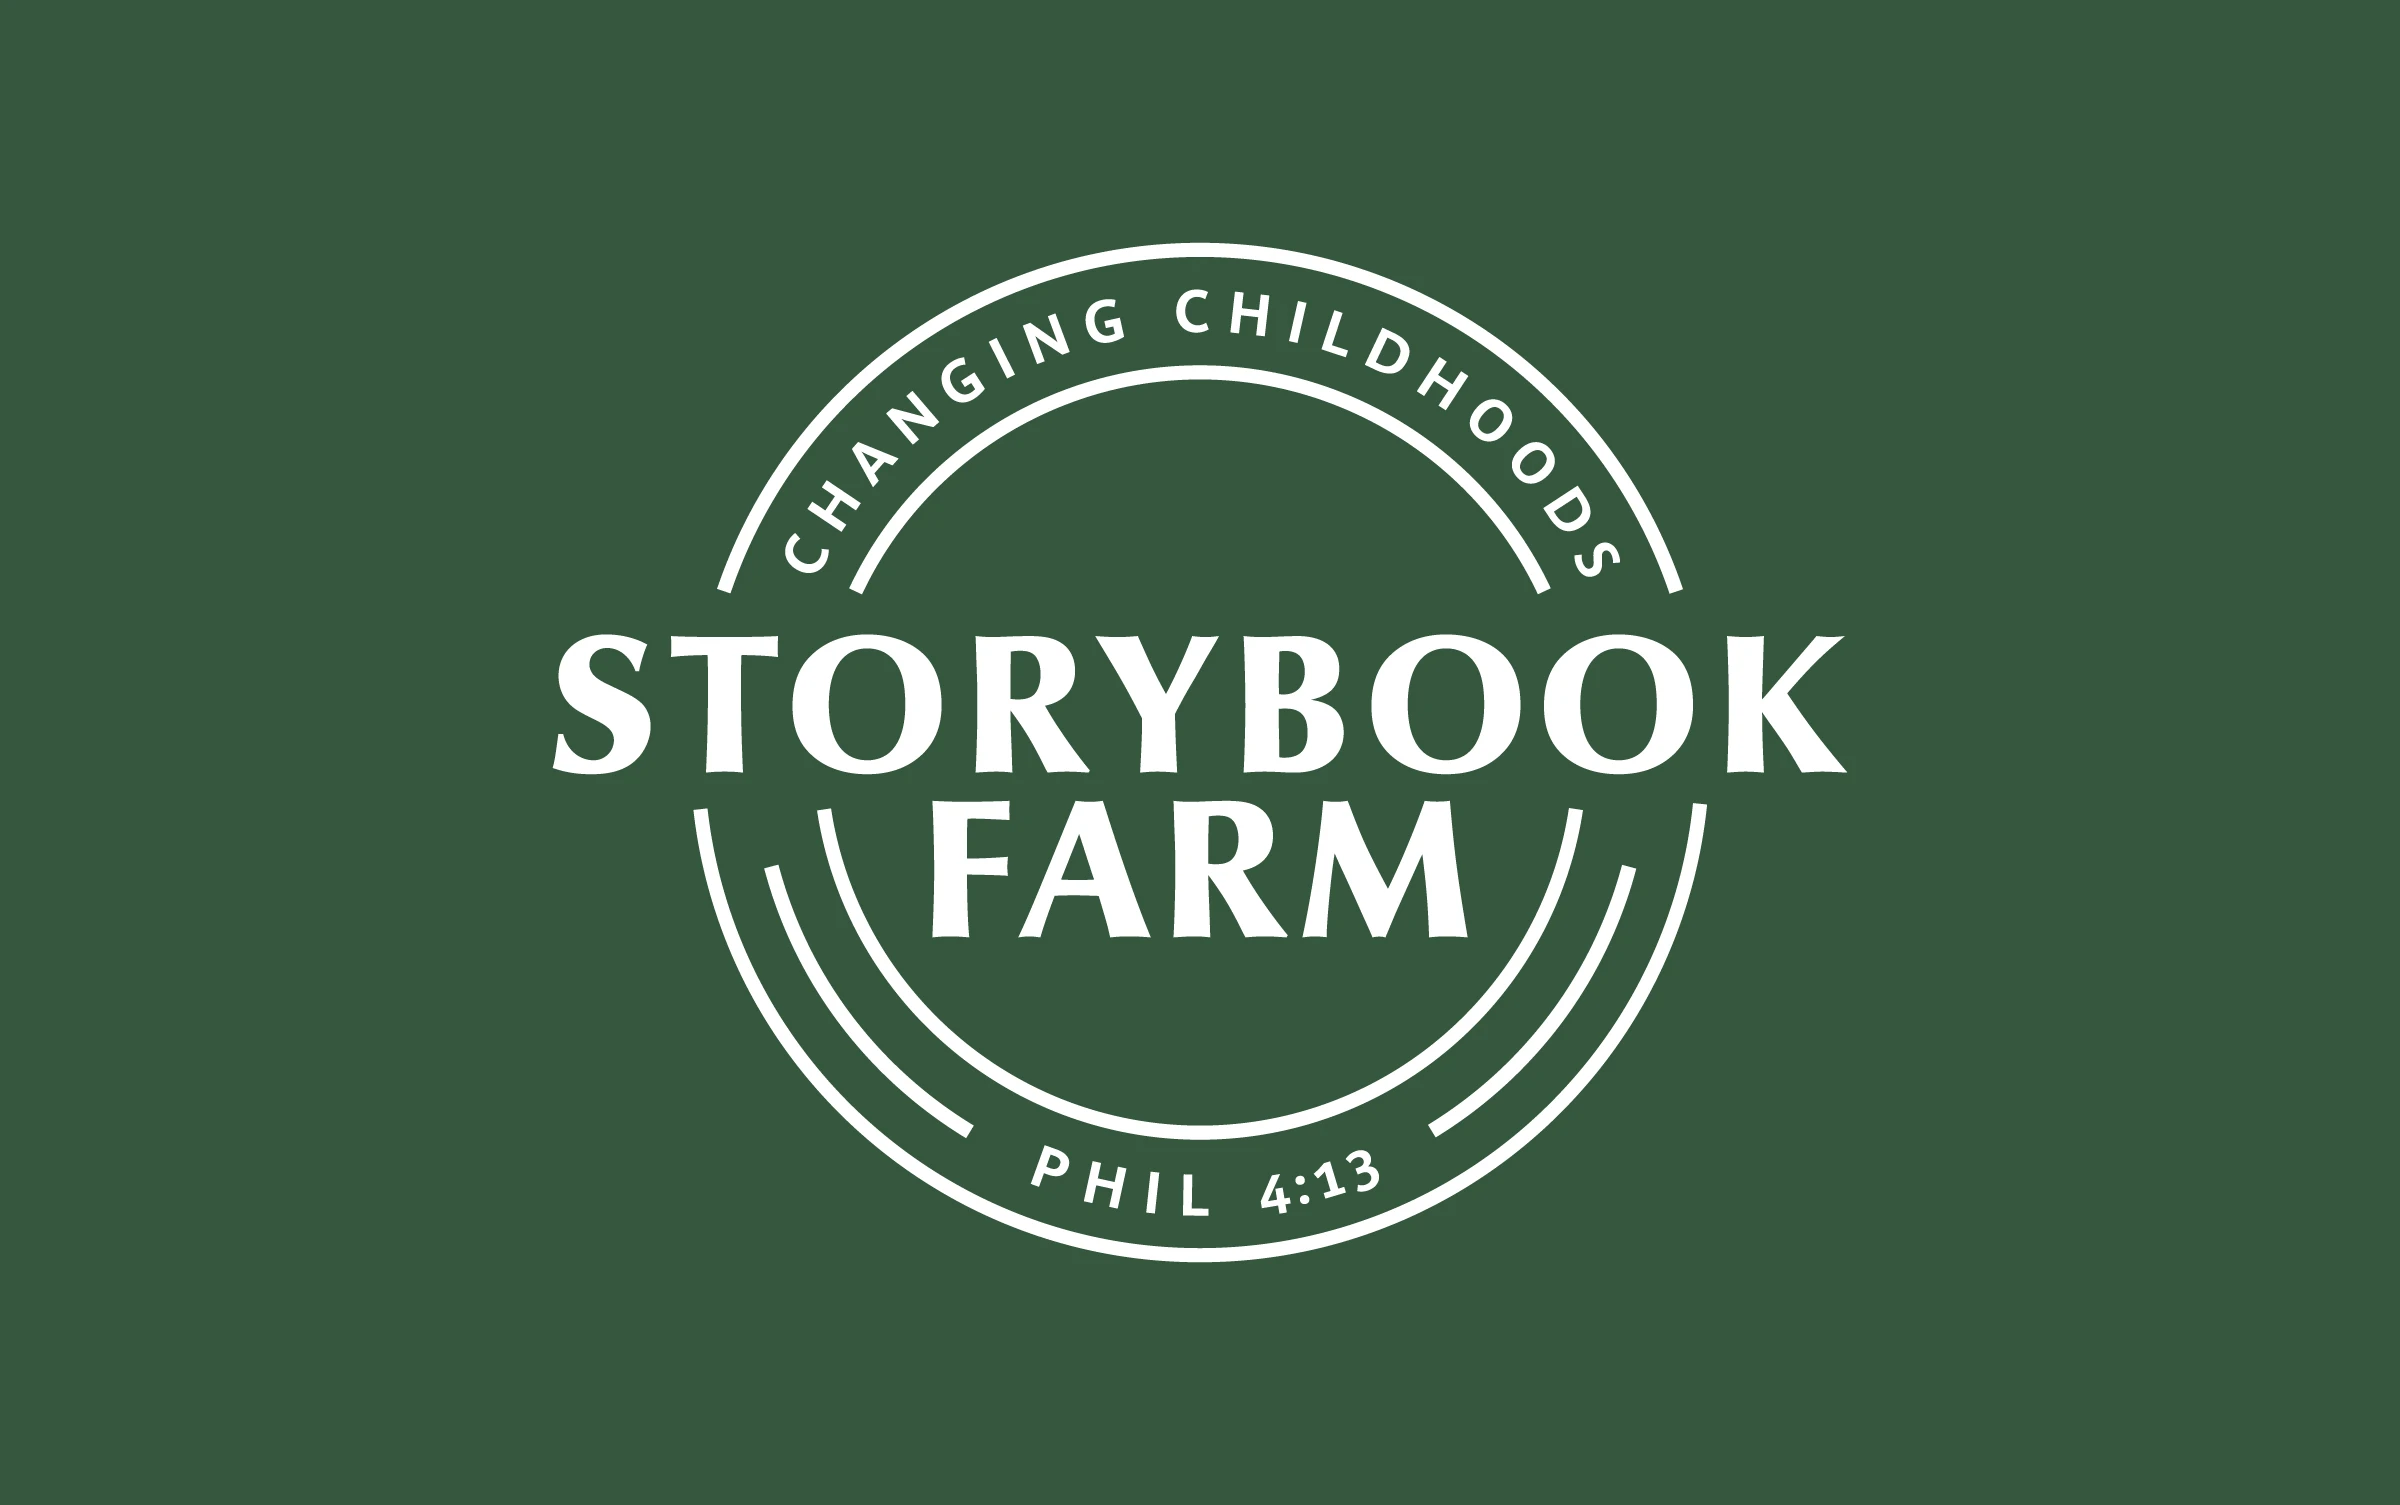 storybook farm nonprofit here molly girl marketing firm auburn alabama opelika logo branding social media website development